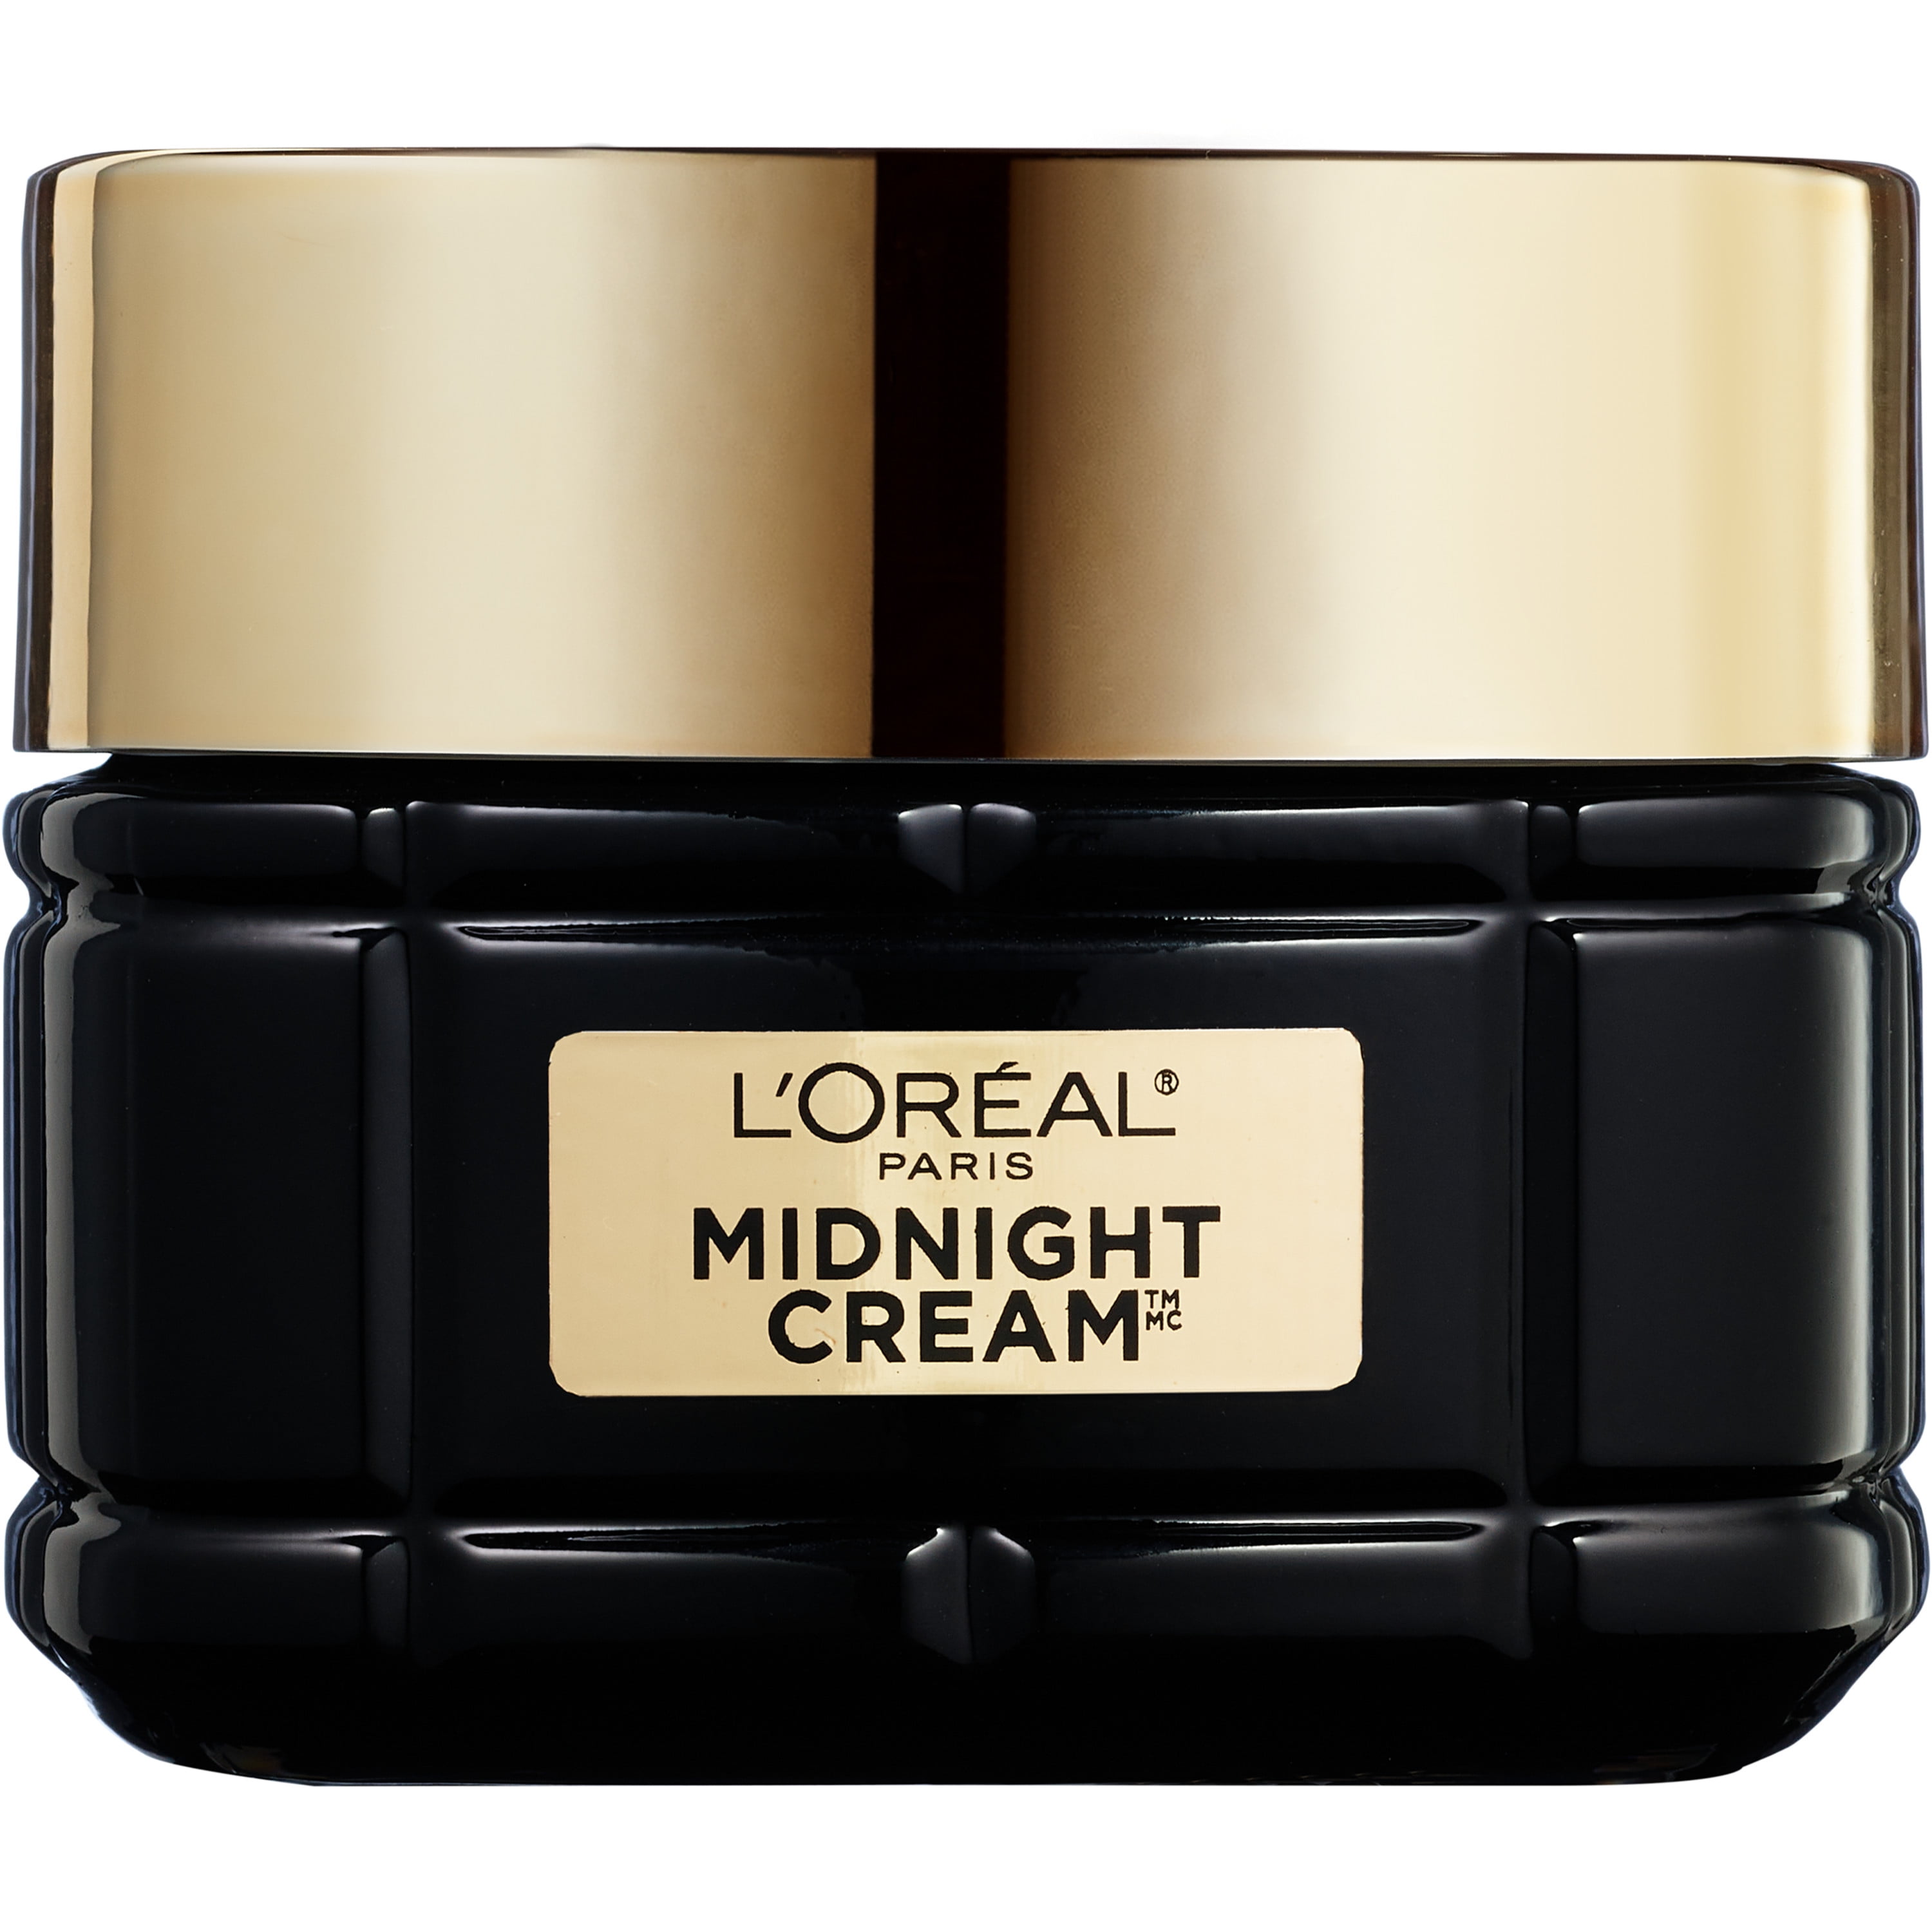 L'Oreal Paris Age Perfect Caring Cell Renewal Midnight Cream, Antioxidants,  1.7 oz